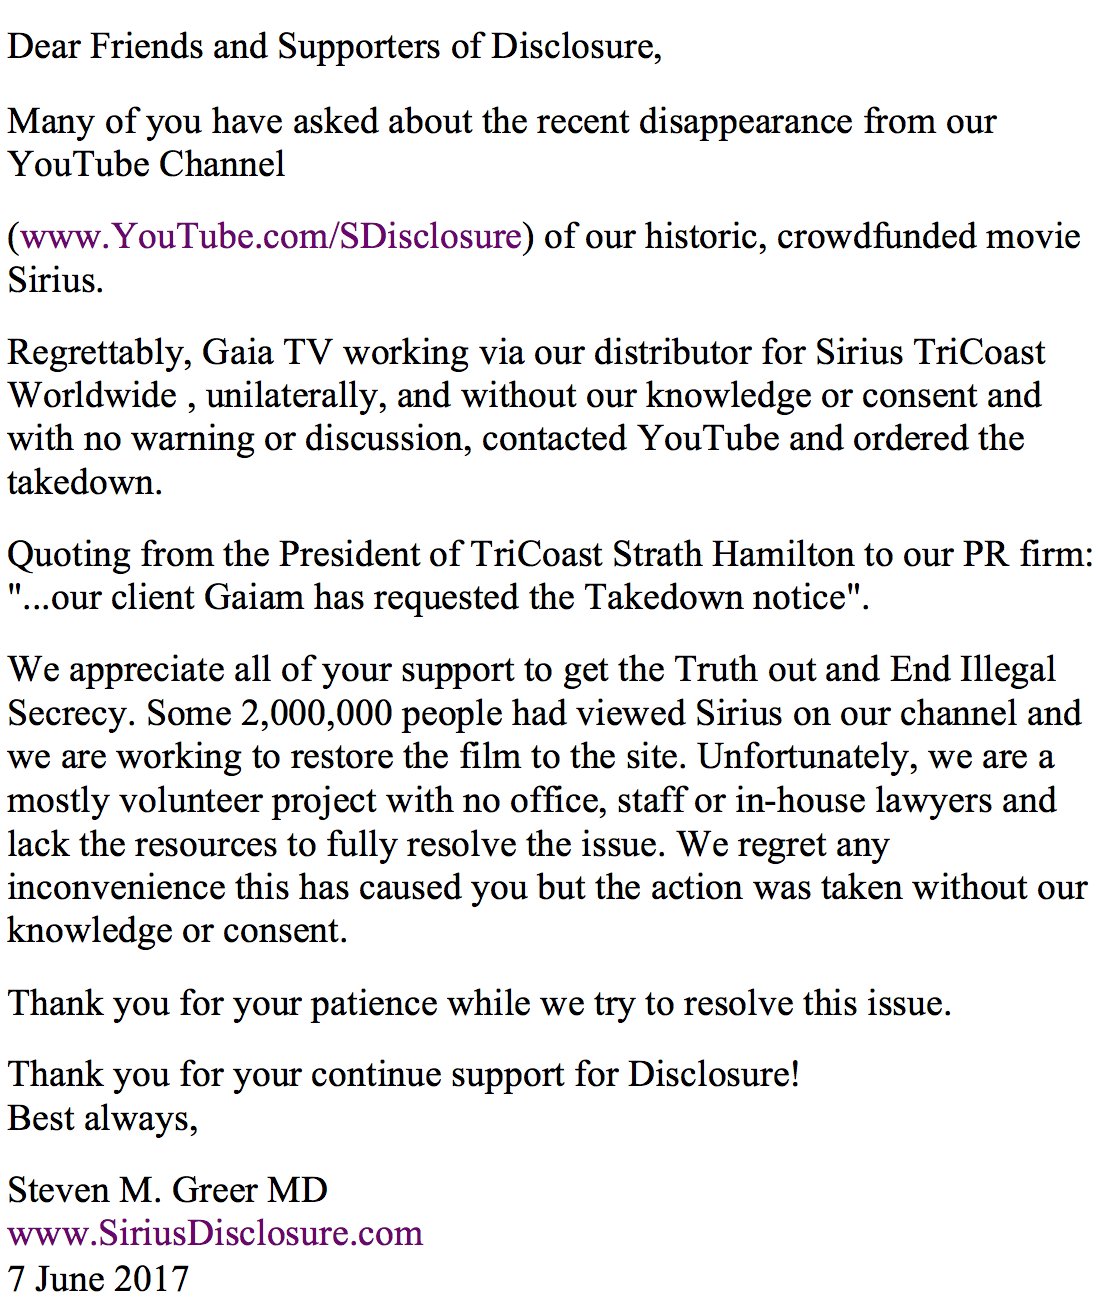 GaiaTV Takes Down Steven Greer's Sirius Disclosure Film From YouTube DBvO4FsWAA8zaz2